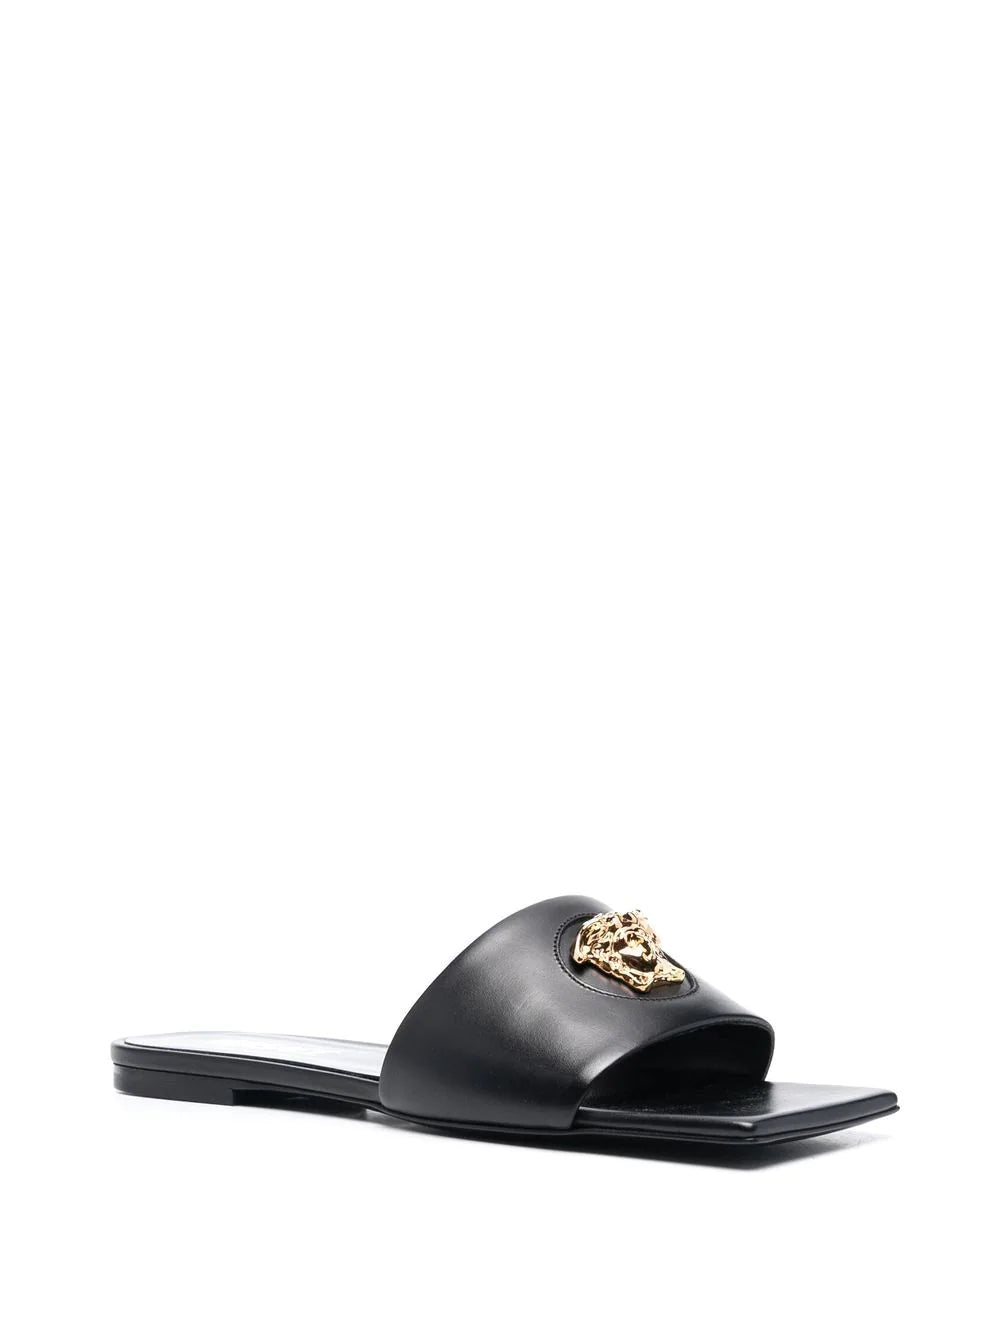 Versace Black La Medusa Flat Sandals